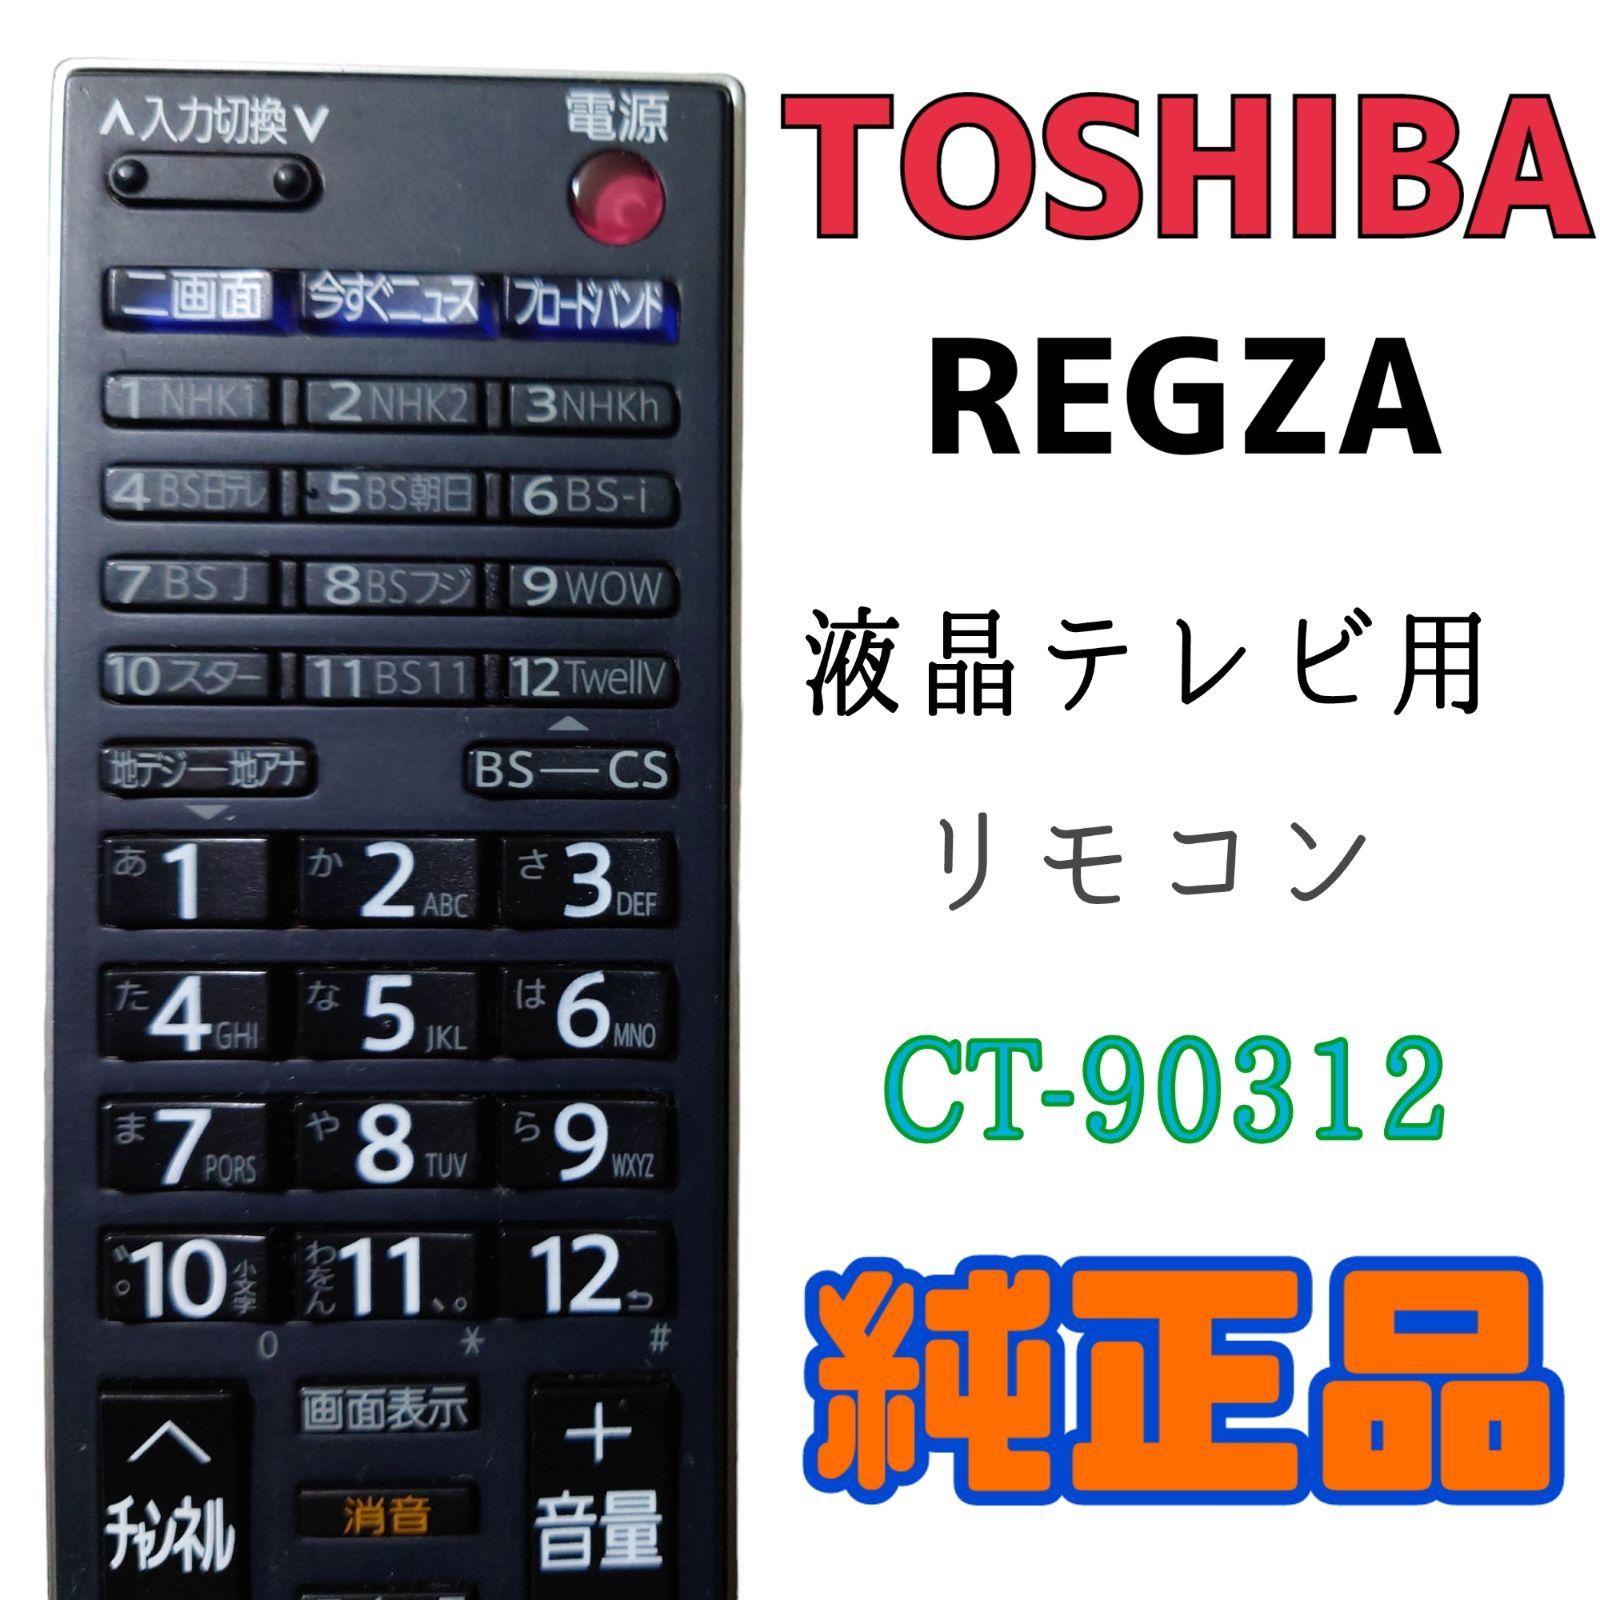 MA076】TOSHIBA☆REGZA 液晶テレビ用リモコン☆CT-90312 MONO+ メルカリ